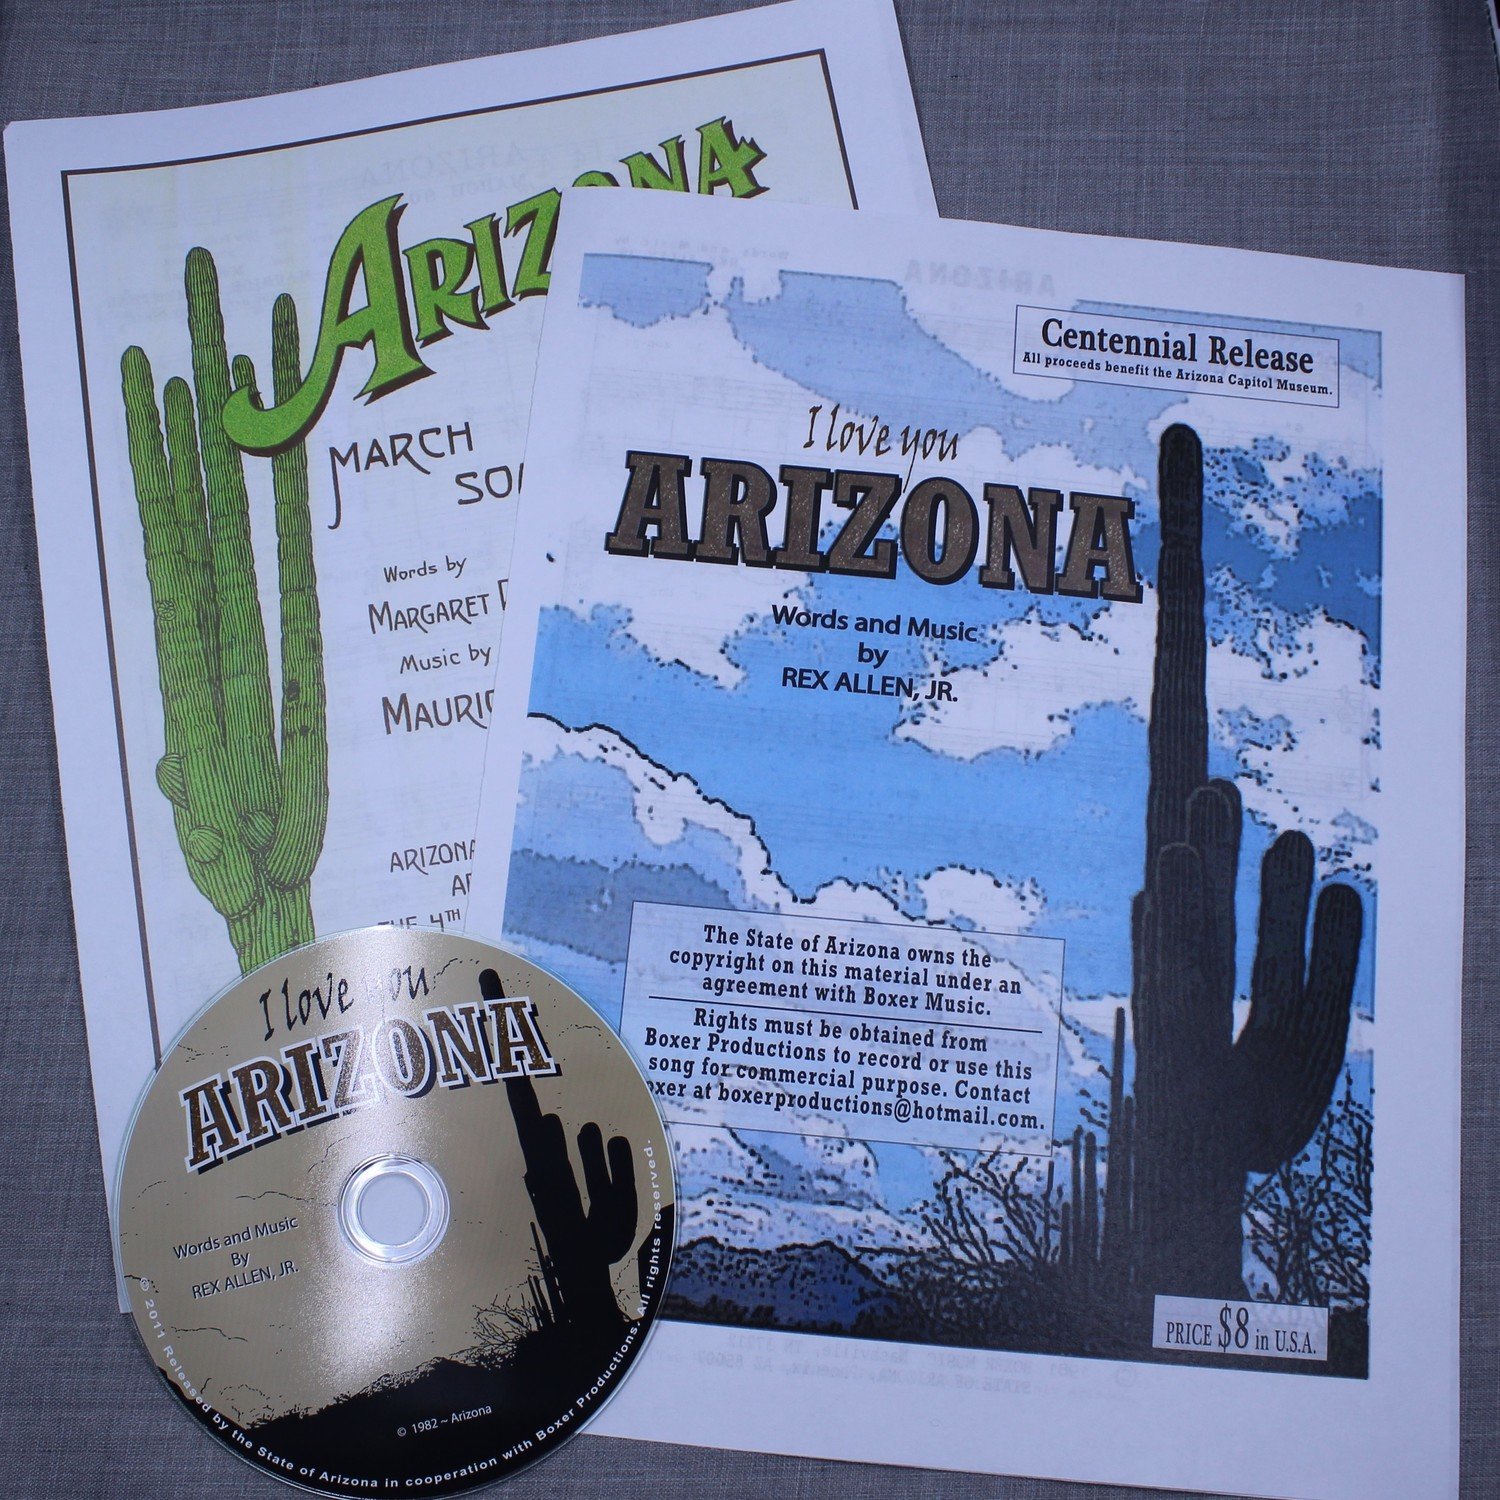 I Love You Arizona Cd & sheet music